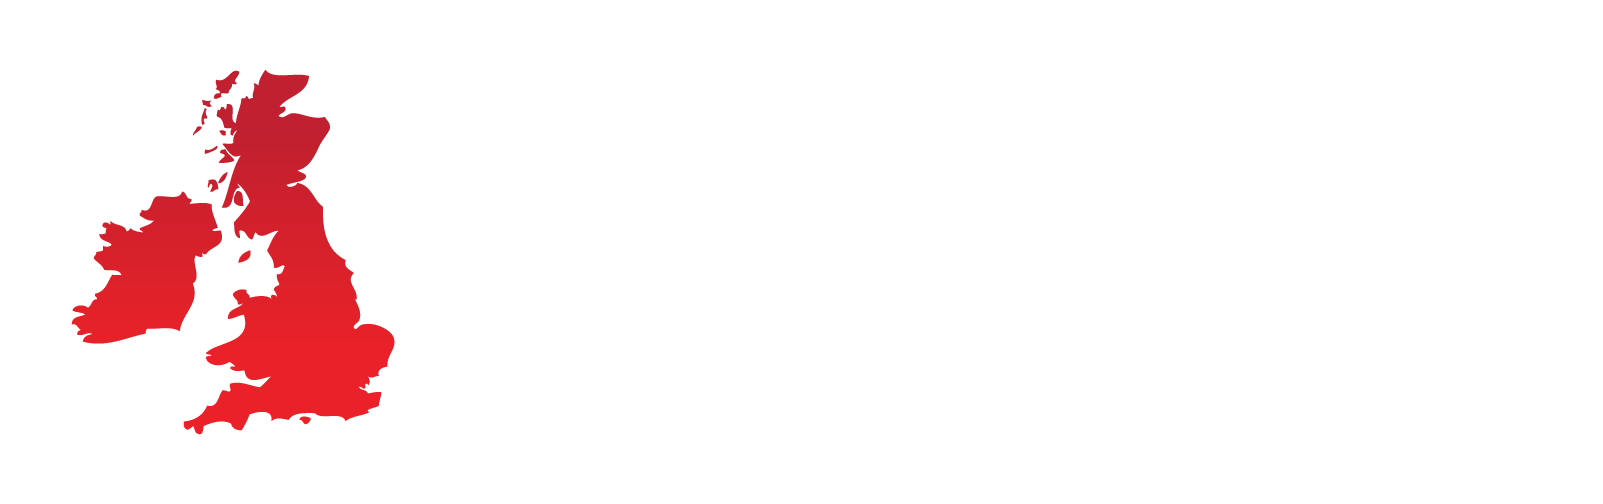 All Day Removals Storage Ltd Company